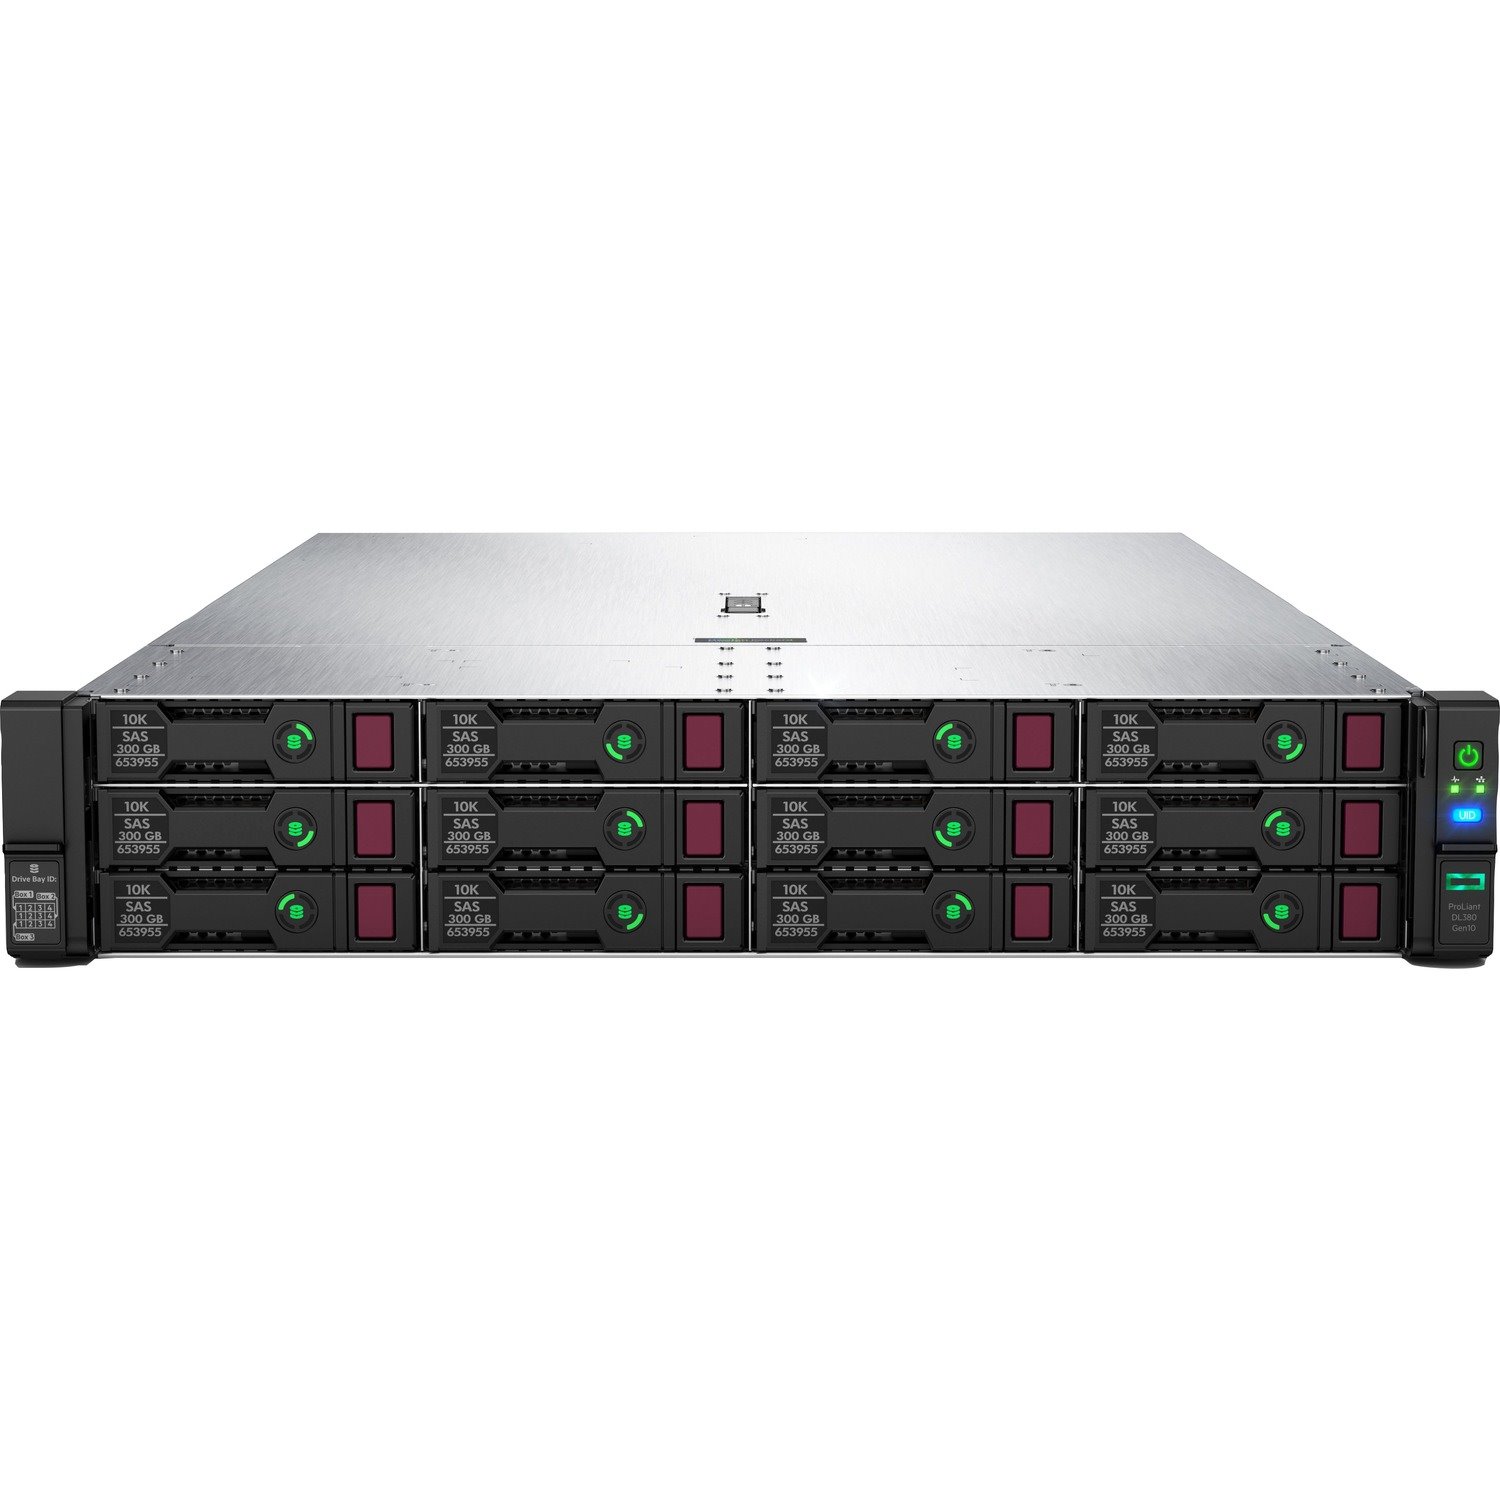 HPE ProLiant DL380 G10 2U Rack Server - 1 x Intel Xeon Gold 5218 2.30 GHz - 32 GB RAM - Serial ATA/600, 12Gb/s SAS Controller